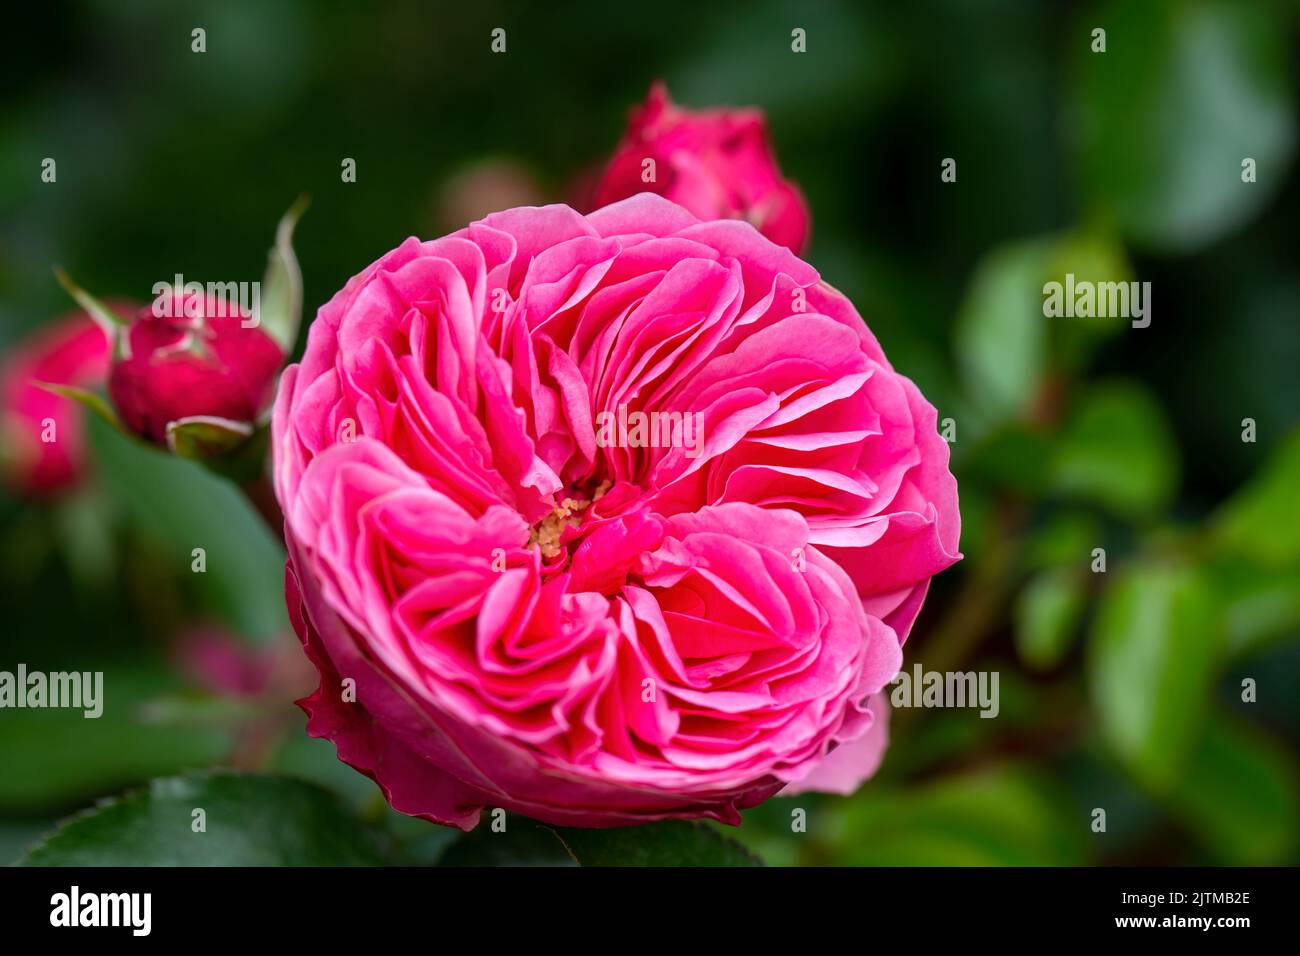 Pink rose flower bloom in the garden Stock Photo